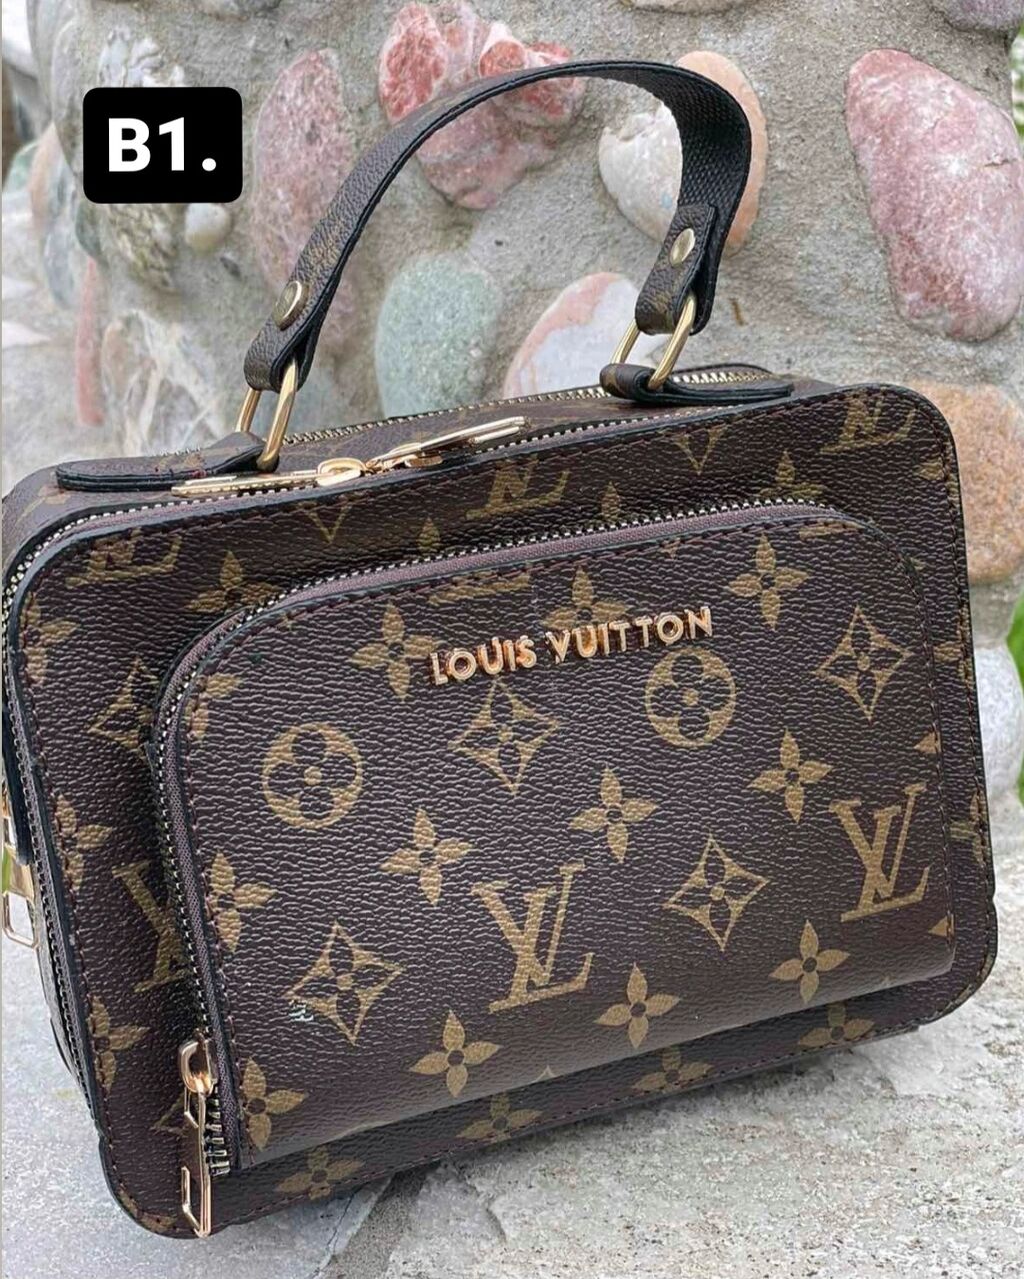 Louis Vuitton Torbe Original Cena